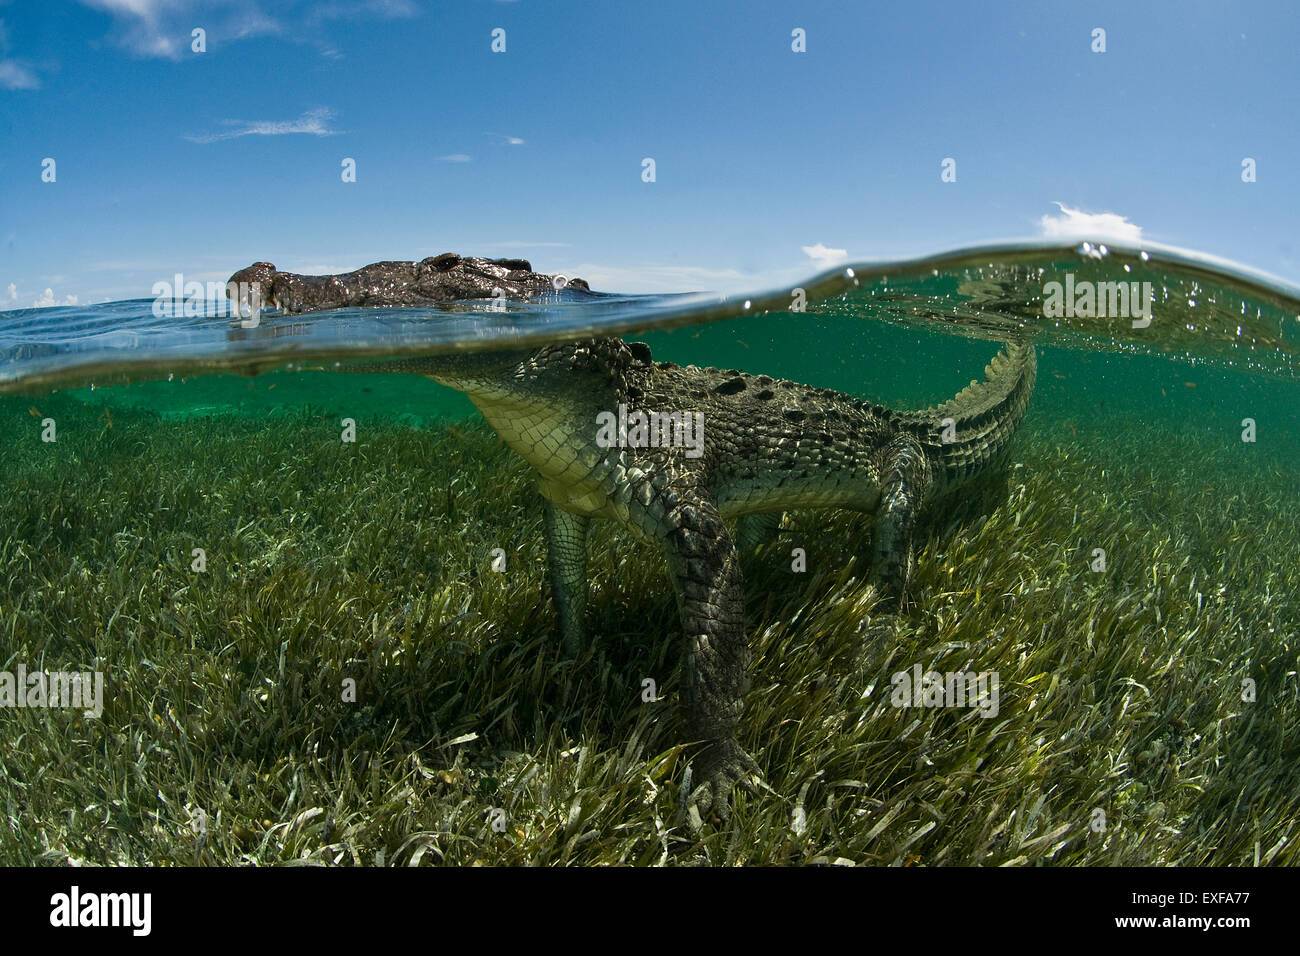 American crocodile (crocodylus acutus) in clear waters of Caribbean, Chinchorro Banks (Biosphere Reserve), Quintana Roo, Mexico Stock Photo